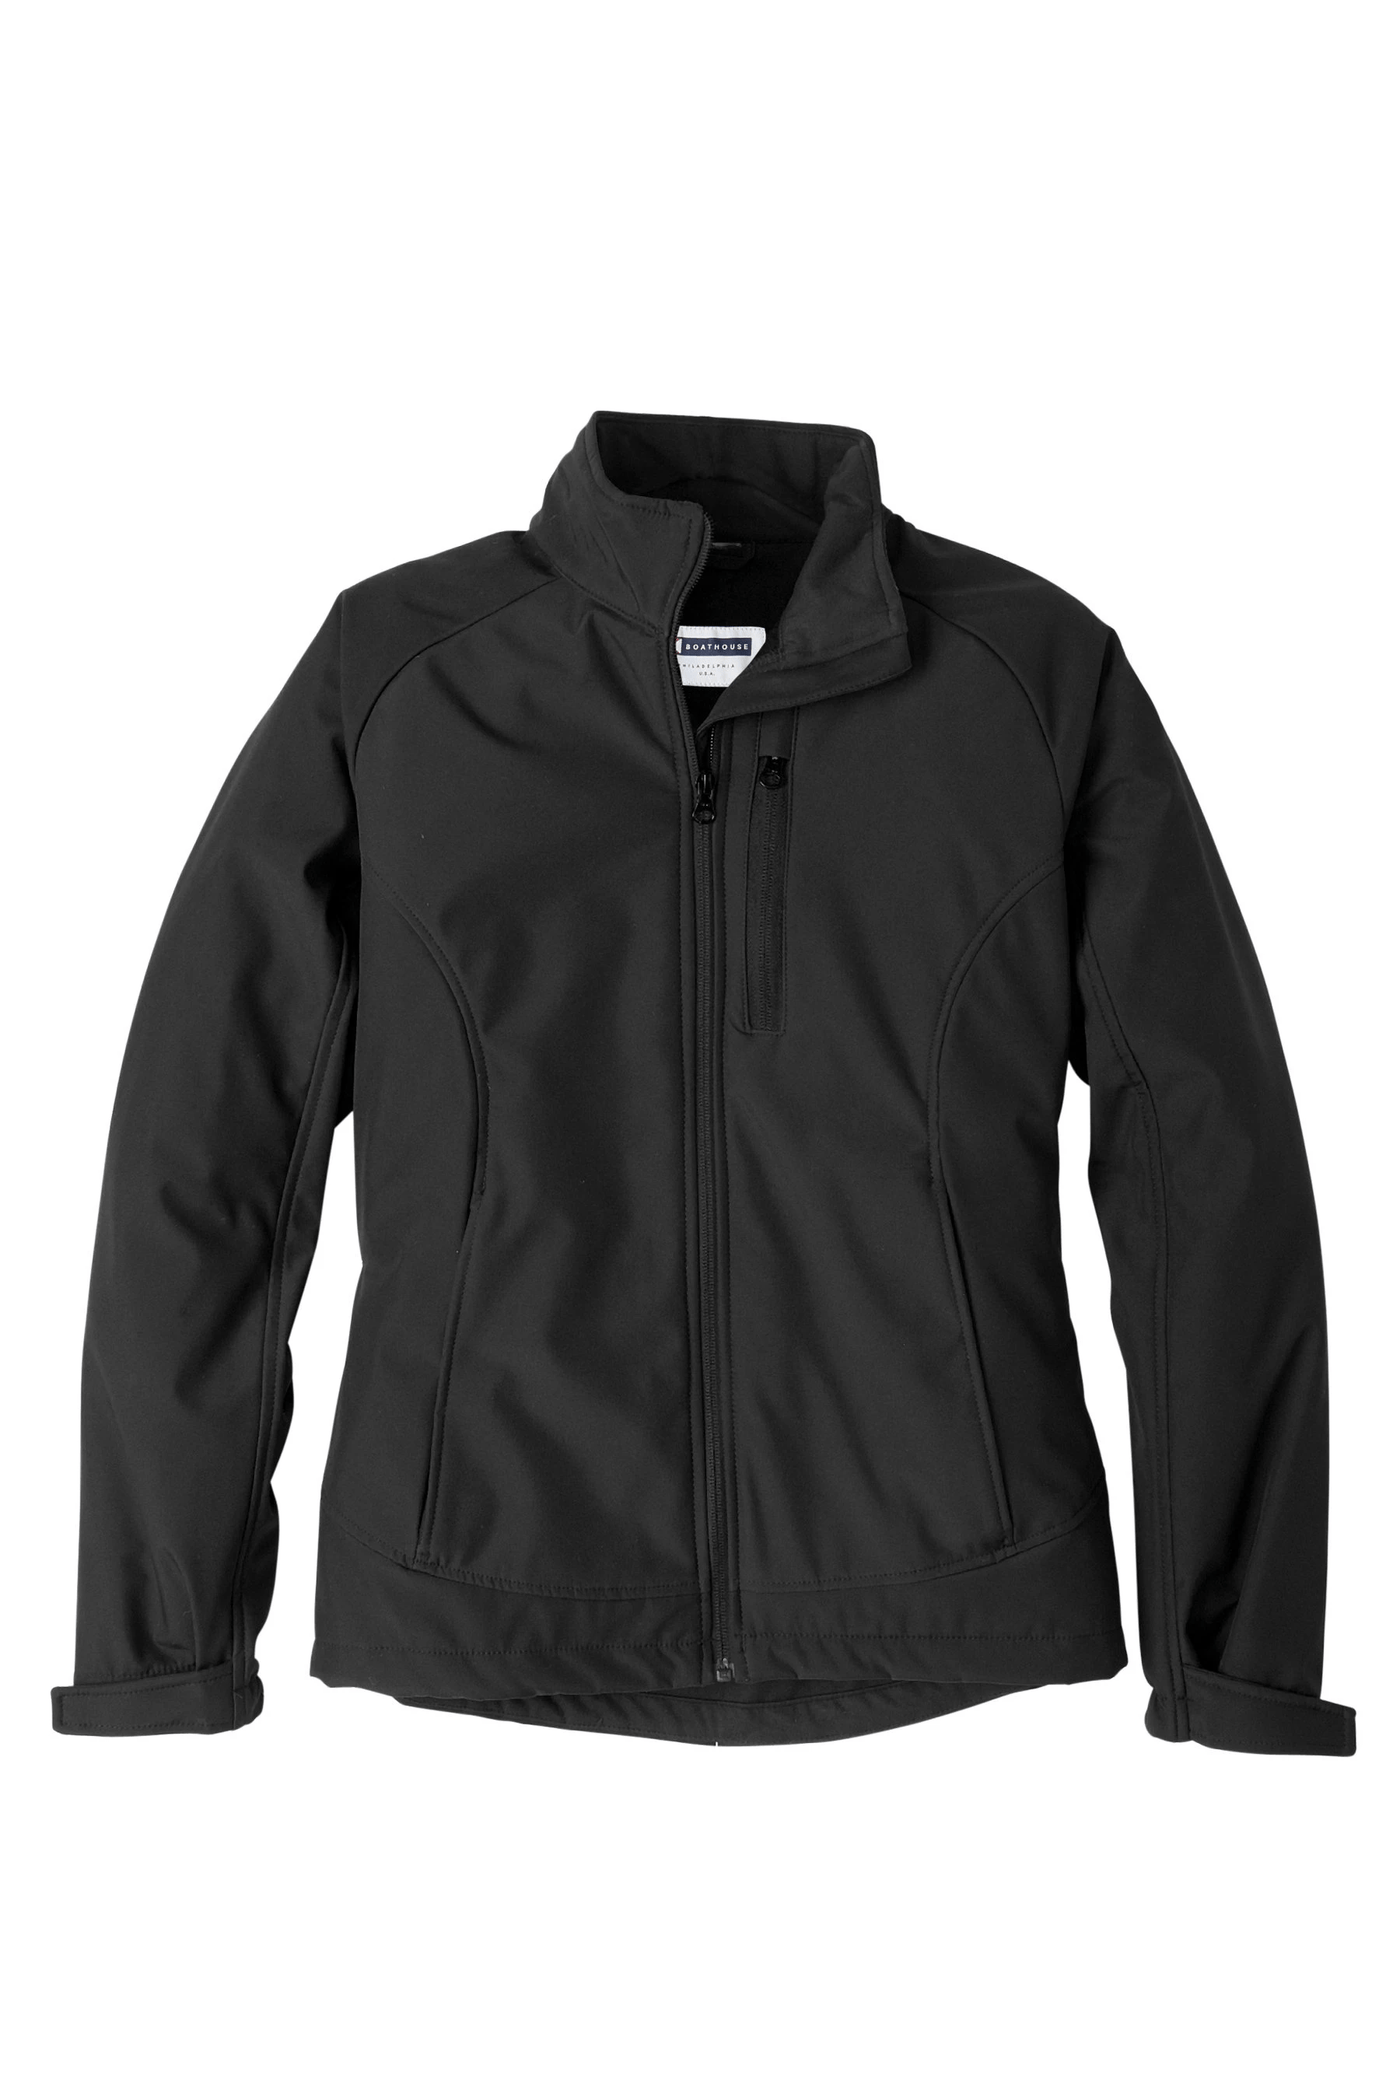 Women's Equinox Soft Shell Jacket Black / X-Small